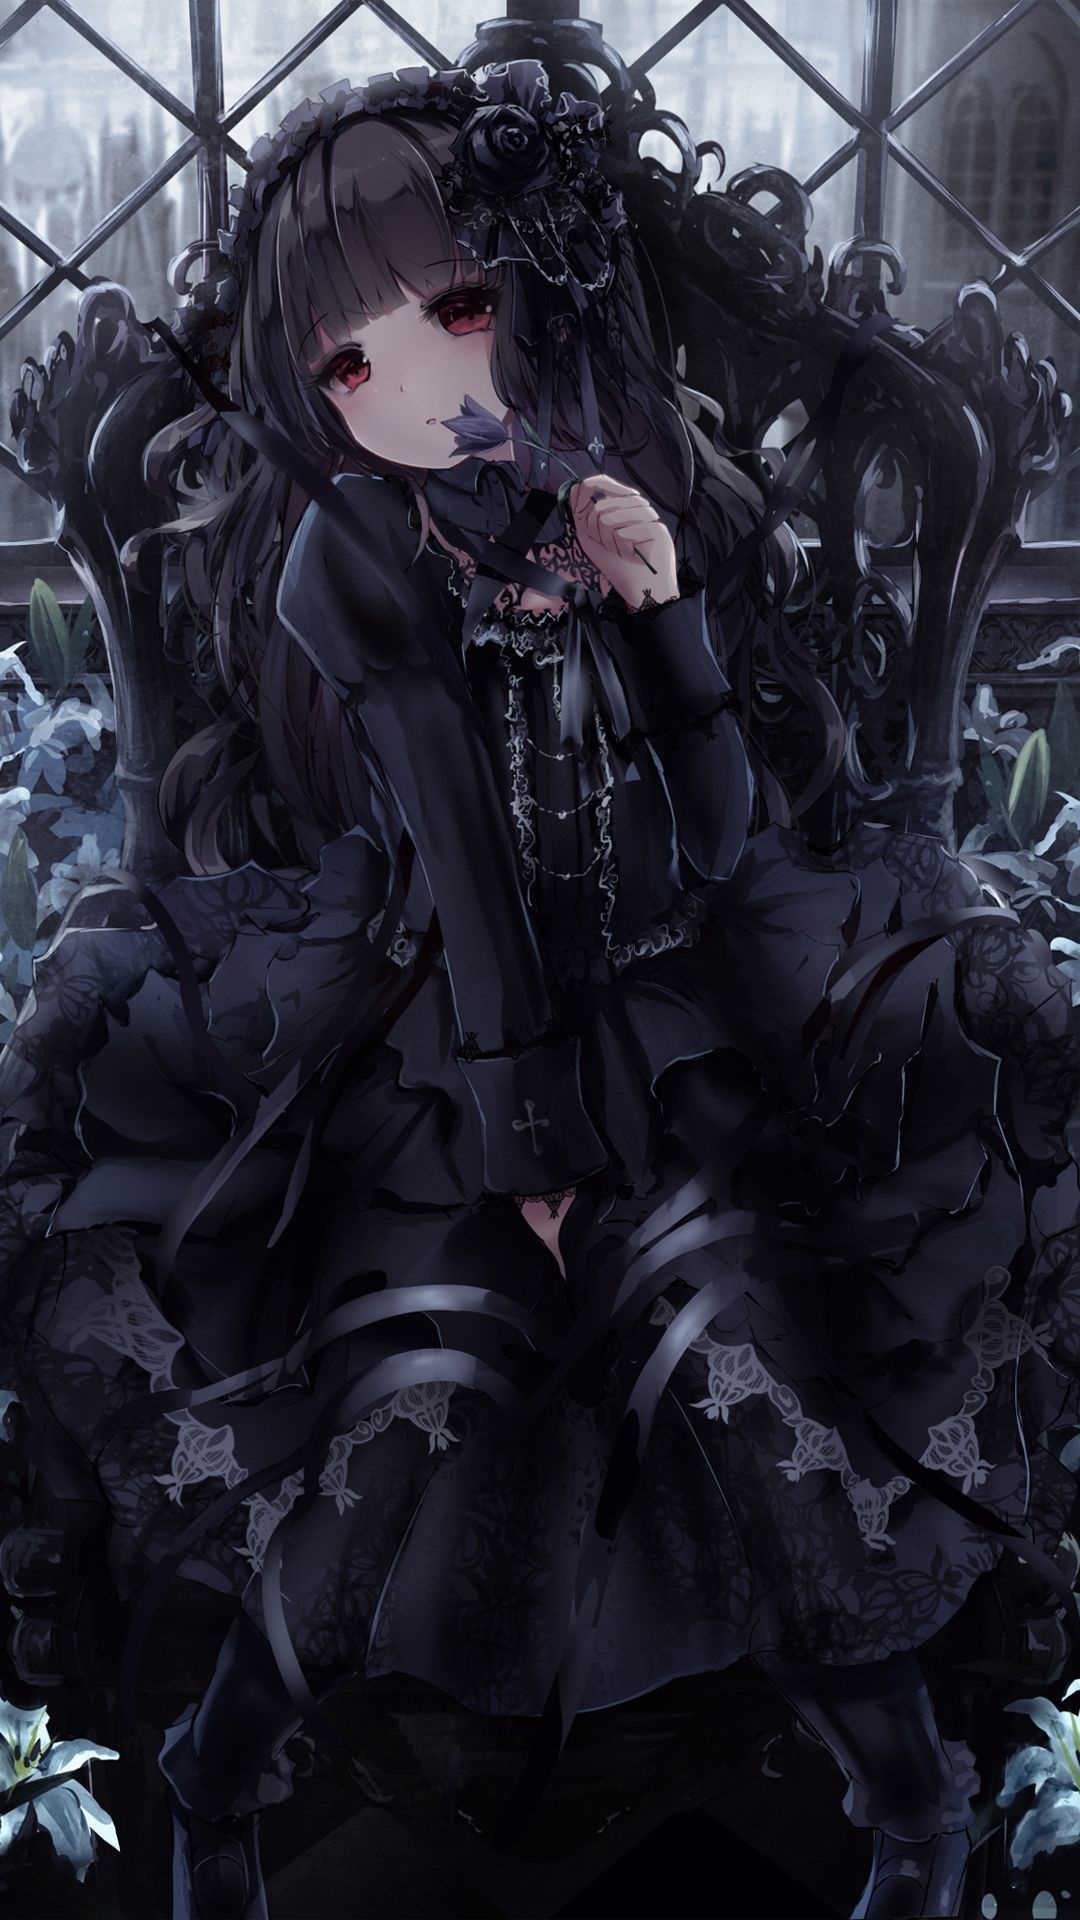 Gothic Anime: Gothic Lolita fashion, Japanese subculture, Dark visual art, Victorian costume. 1080x1920 Full HD Background.